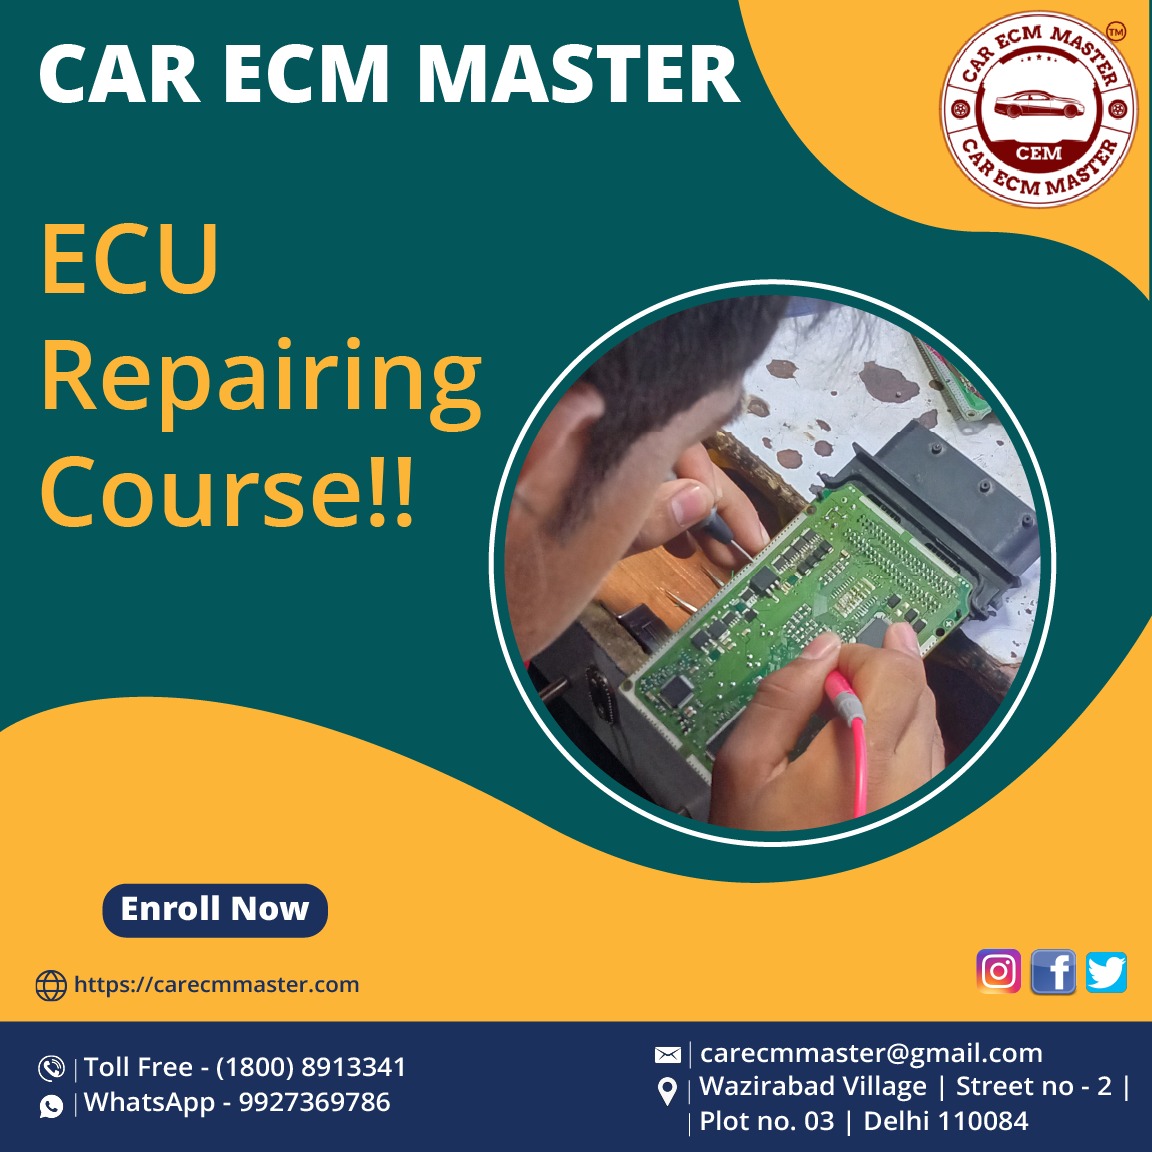 How to become a Car ECU Repairing Expert in Few Days?